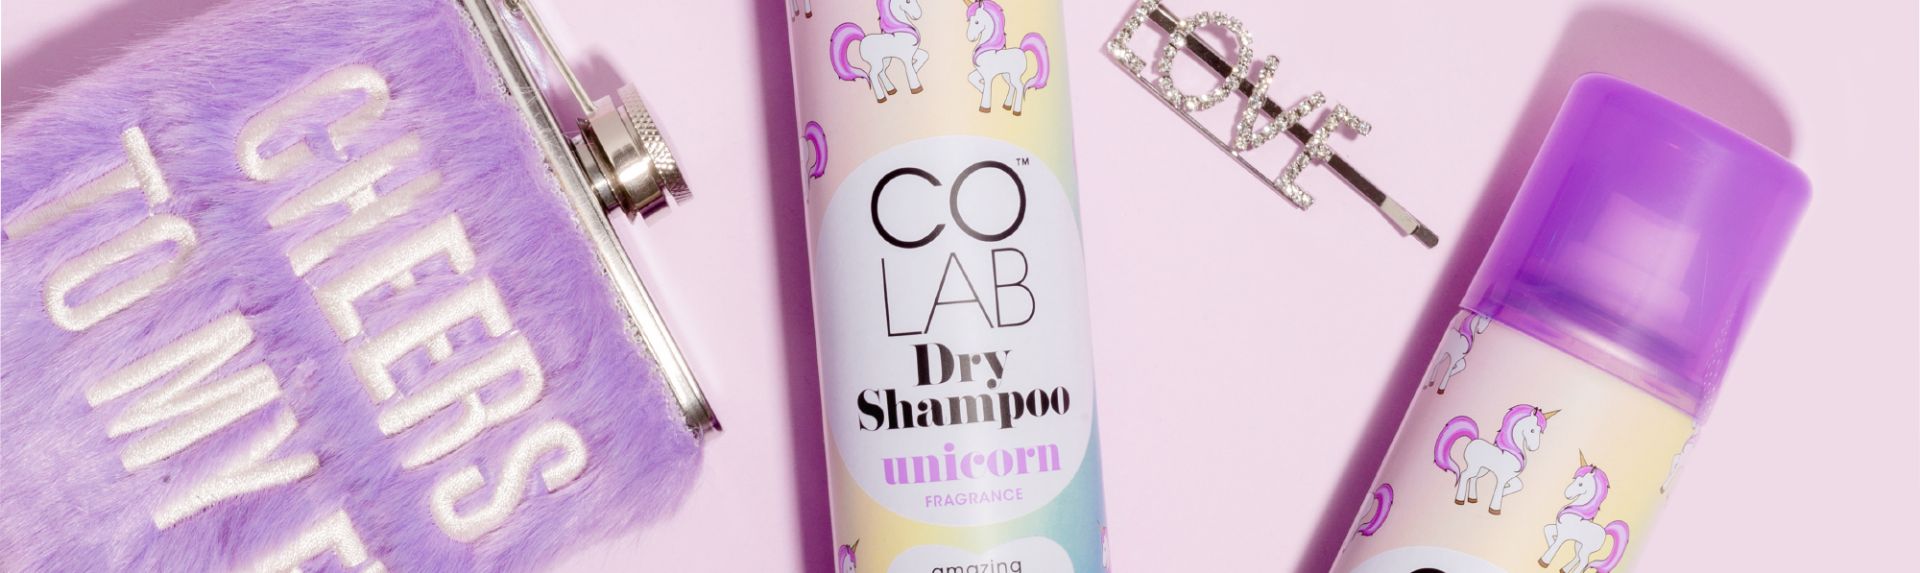 COLAB Unicorn Dry Shampoo banner